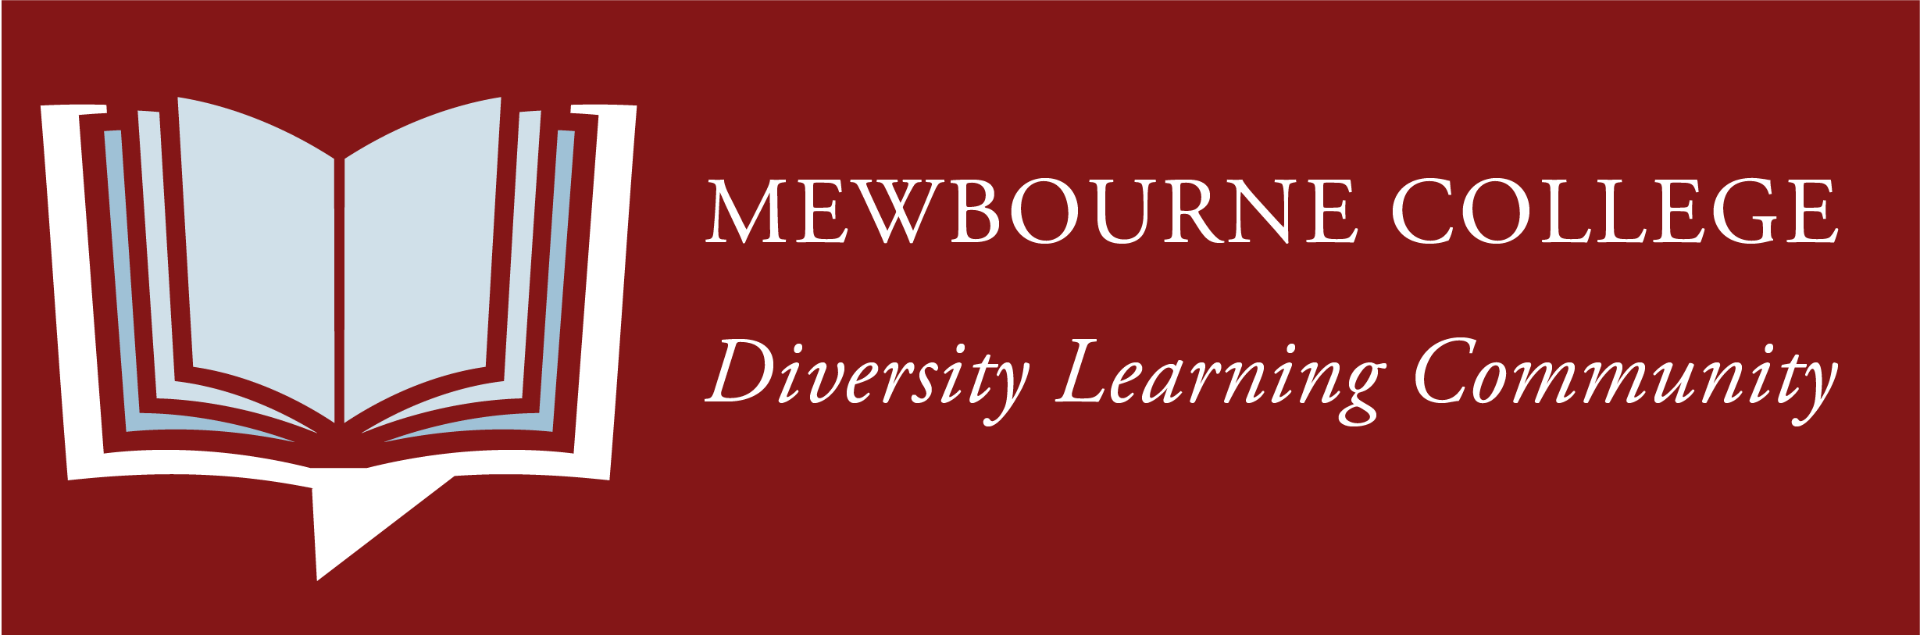 diversity learning community